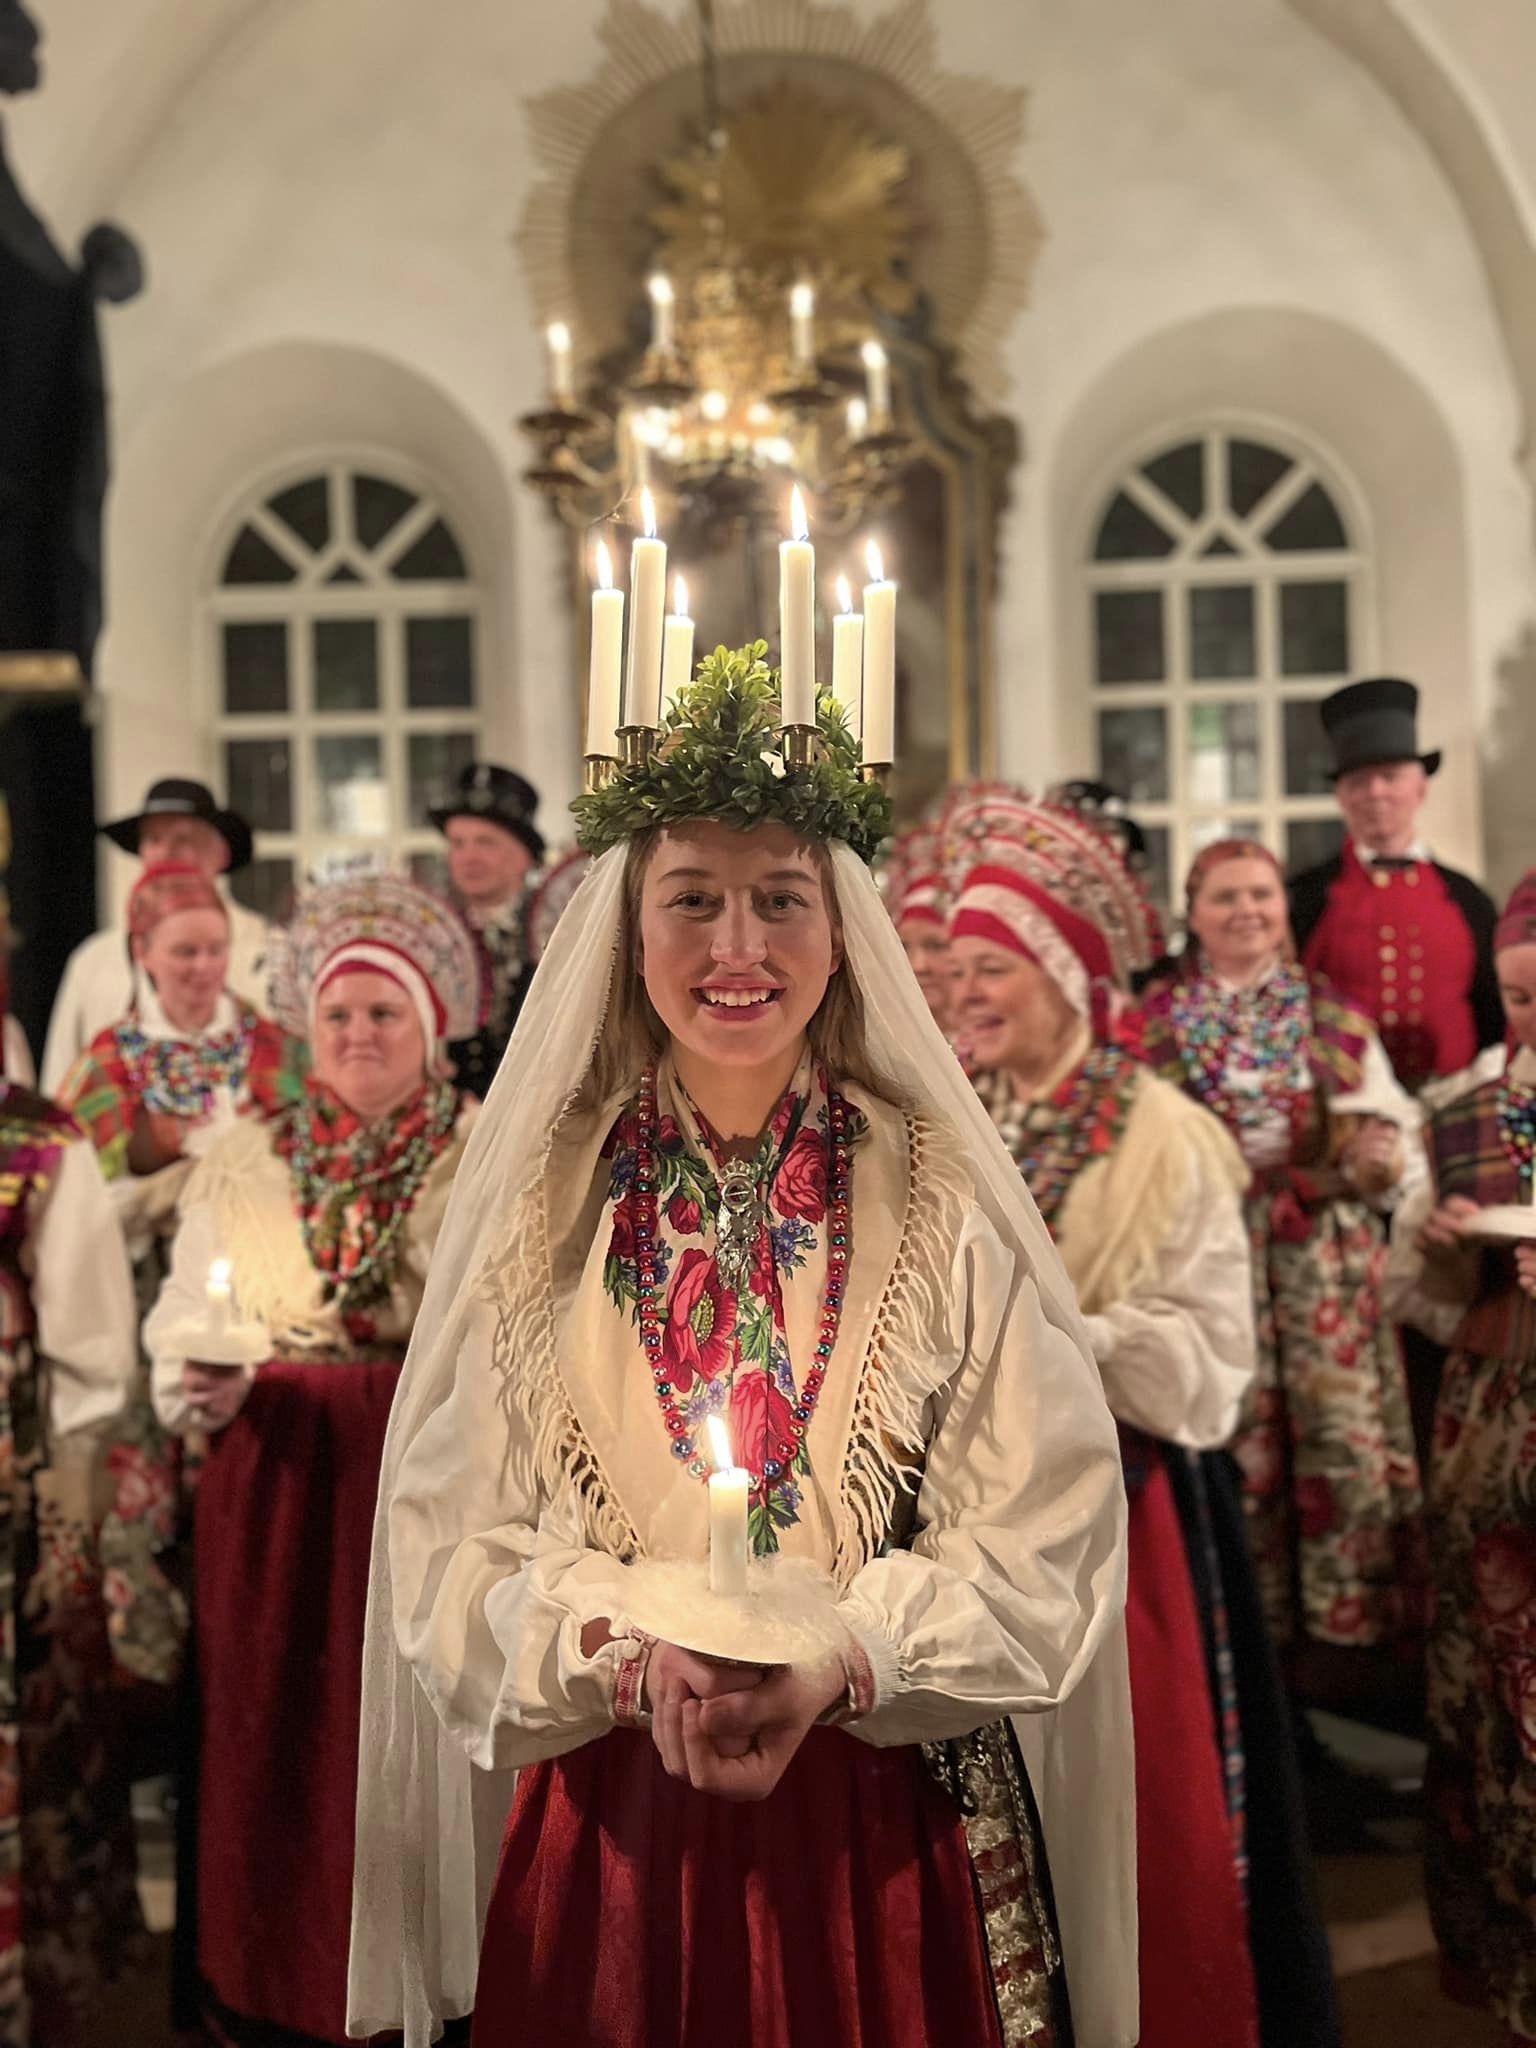 Dalarnas Lussibrud performance